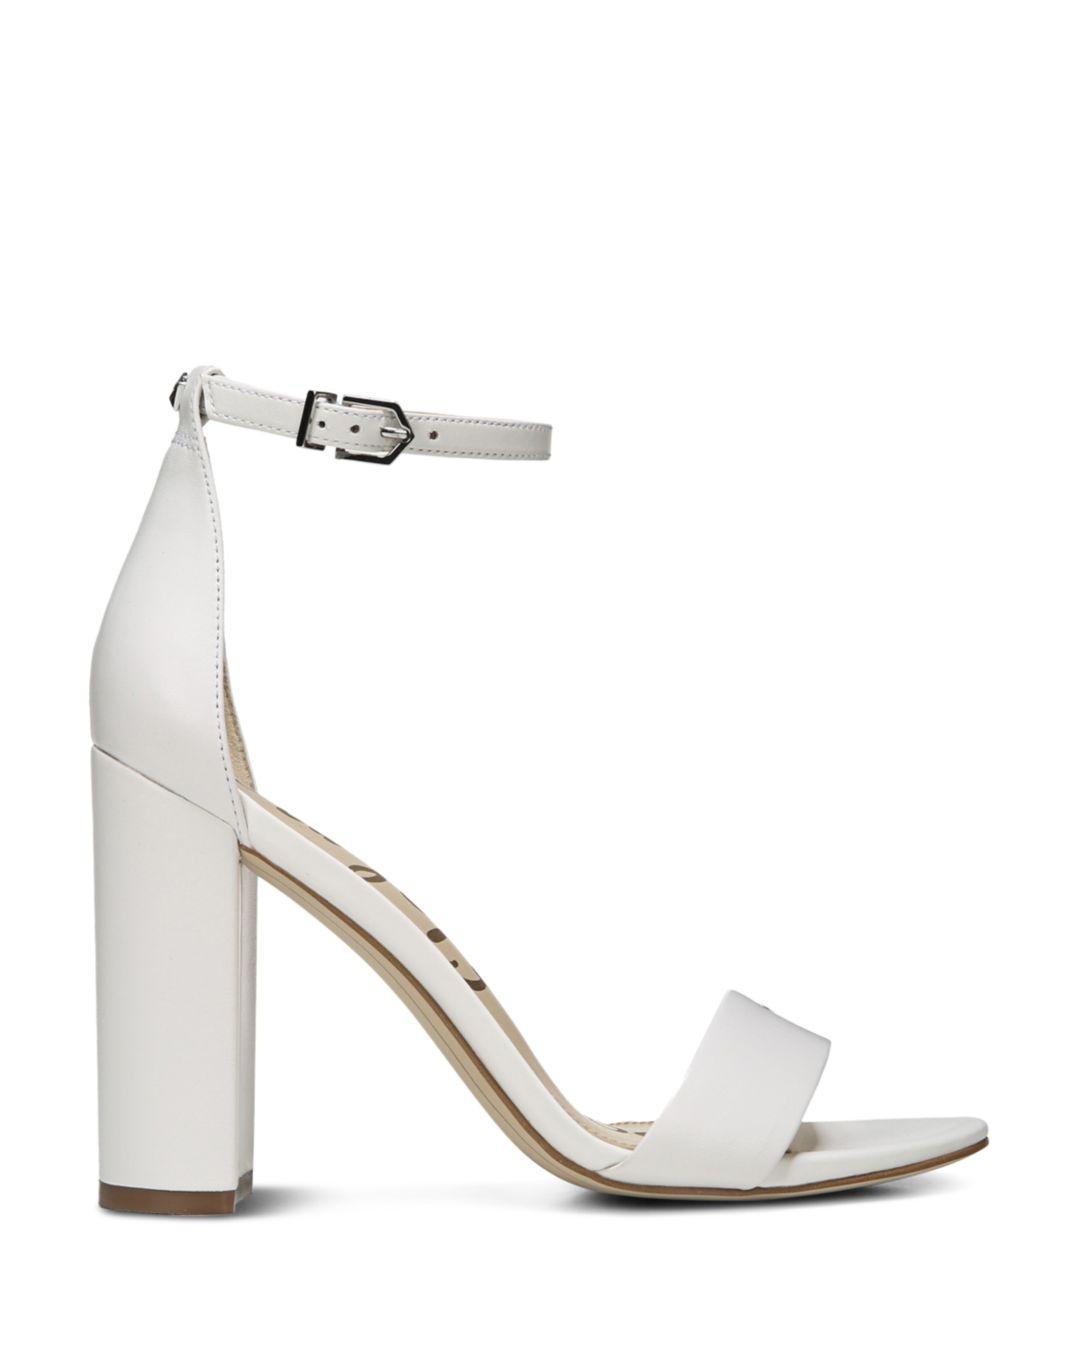 Sam Edelman Yaro Ankle Strap Block Heel Sandals in Bright White Leather ( White) - Lyst